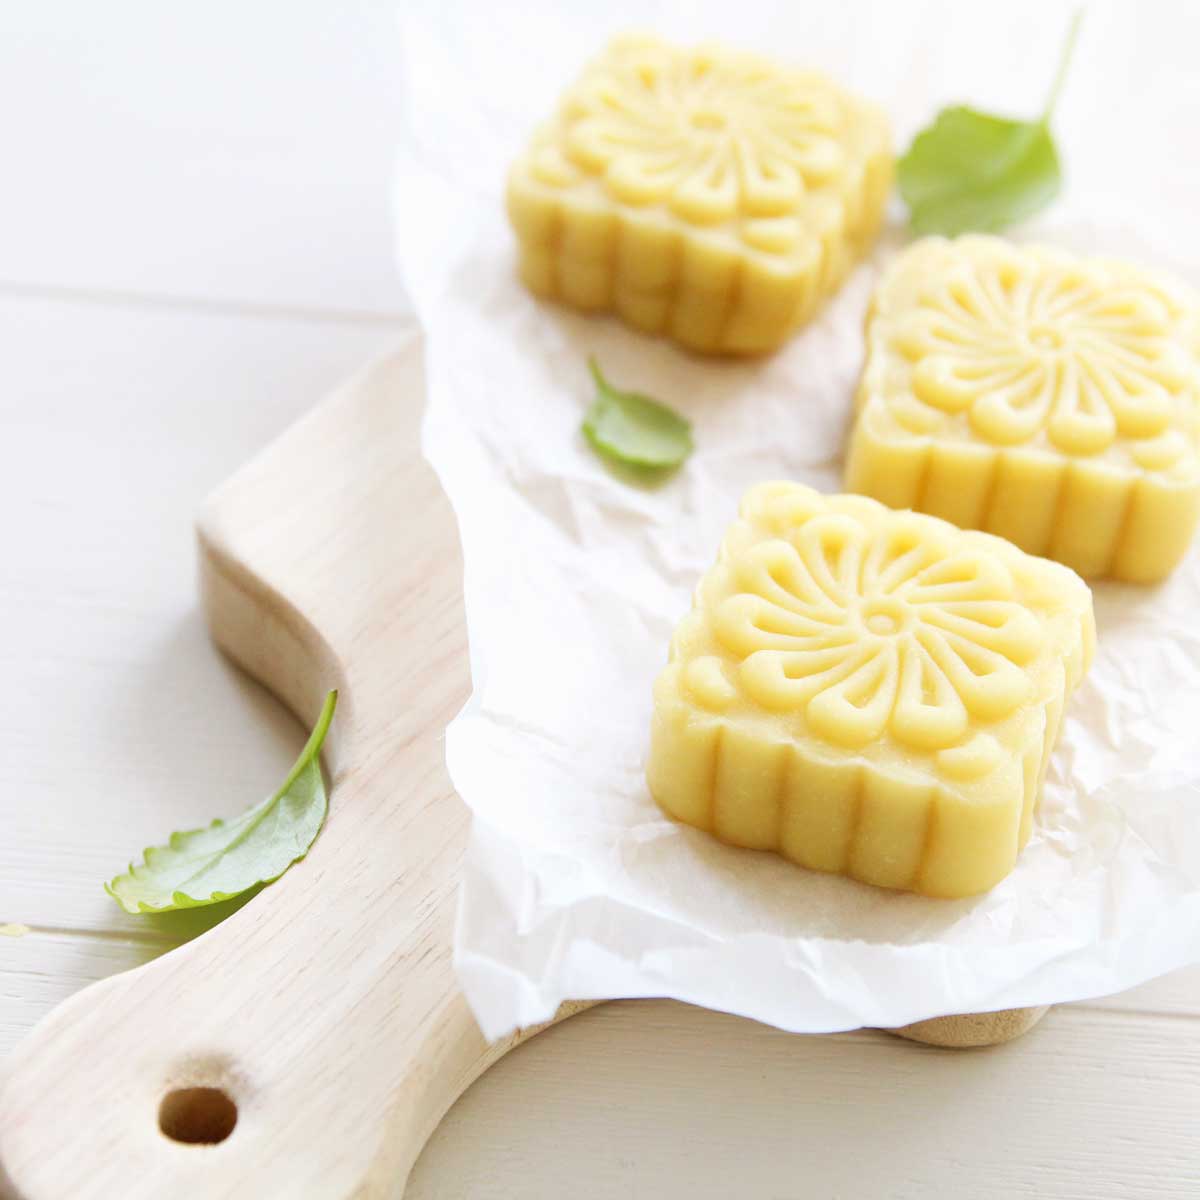 Healthy Mung Bean Snowskin Mooncakes Recipe (Vegan, Gluten-Free) - Japanese Matcha Roll Cake